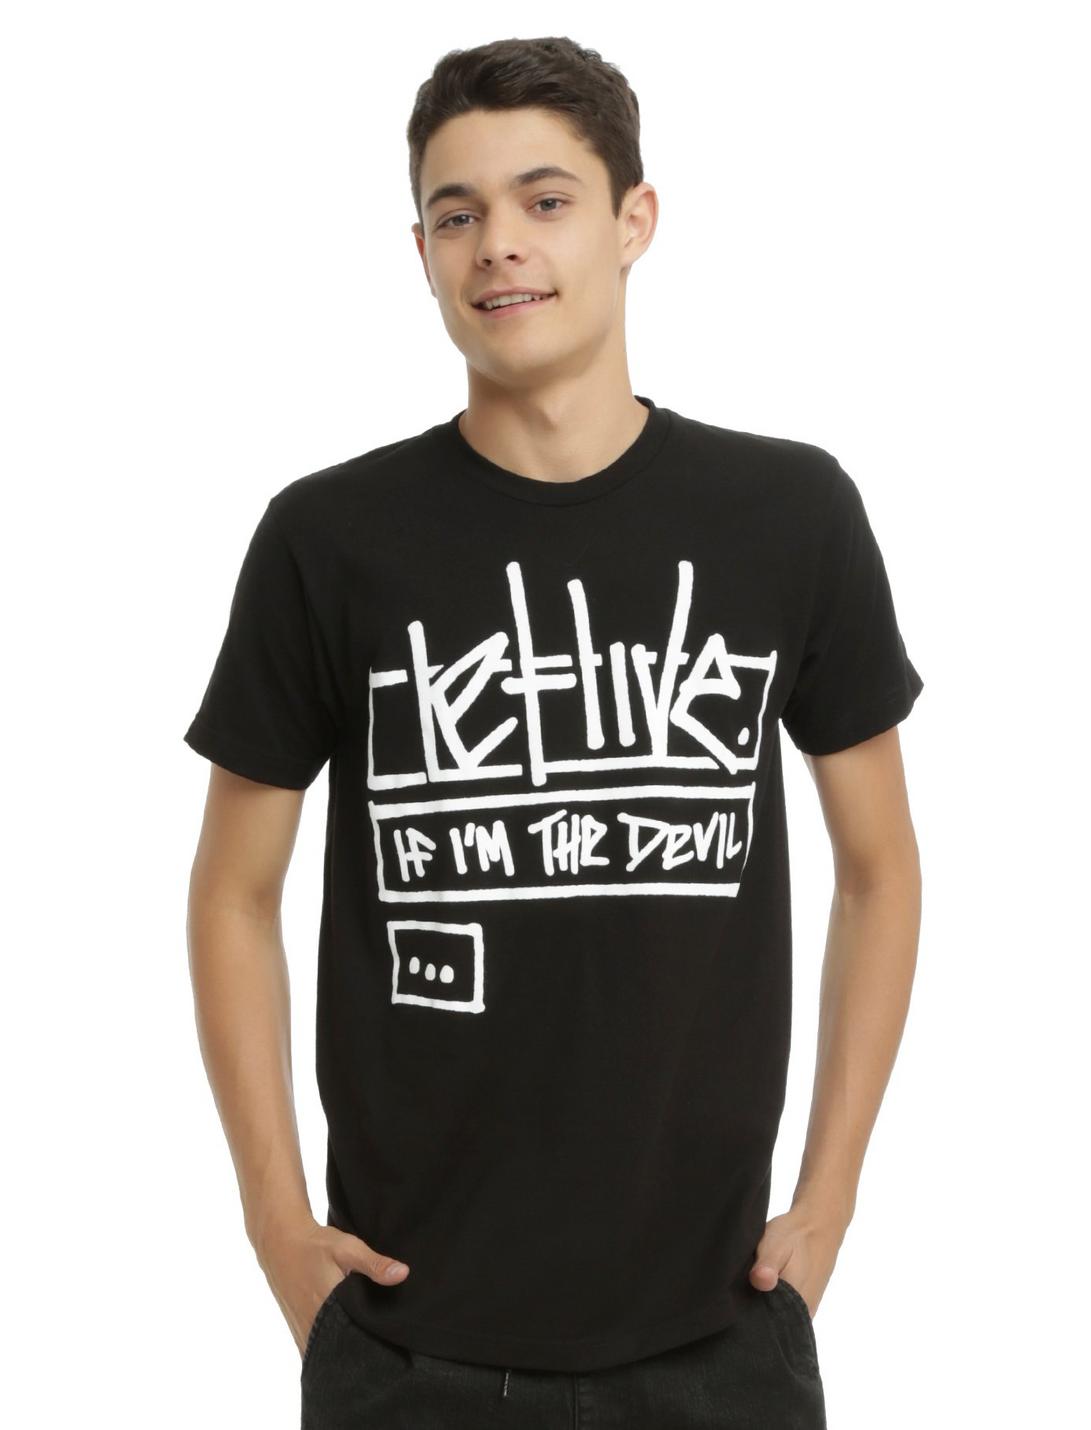 Letlive. If I'm The Devil... T-Shirt | Hot Topic